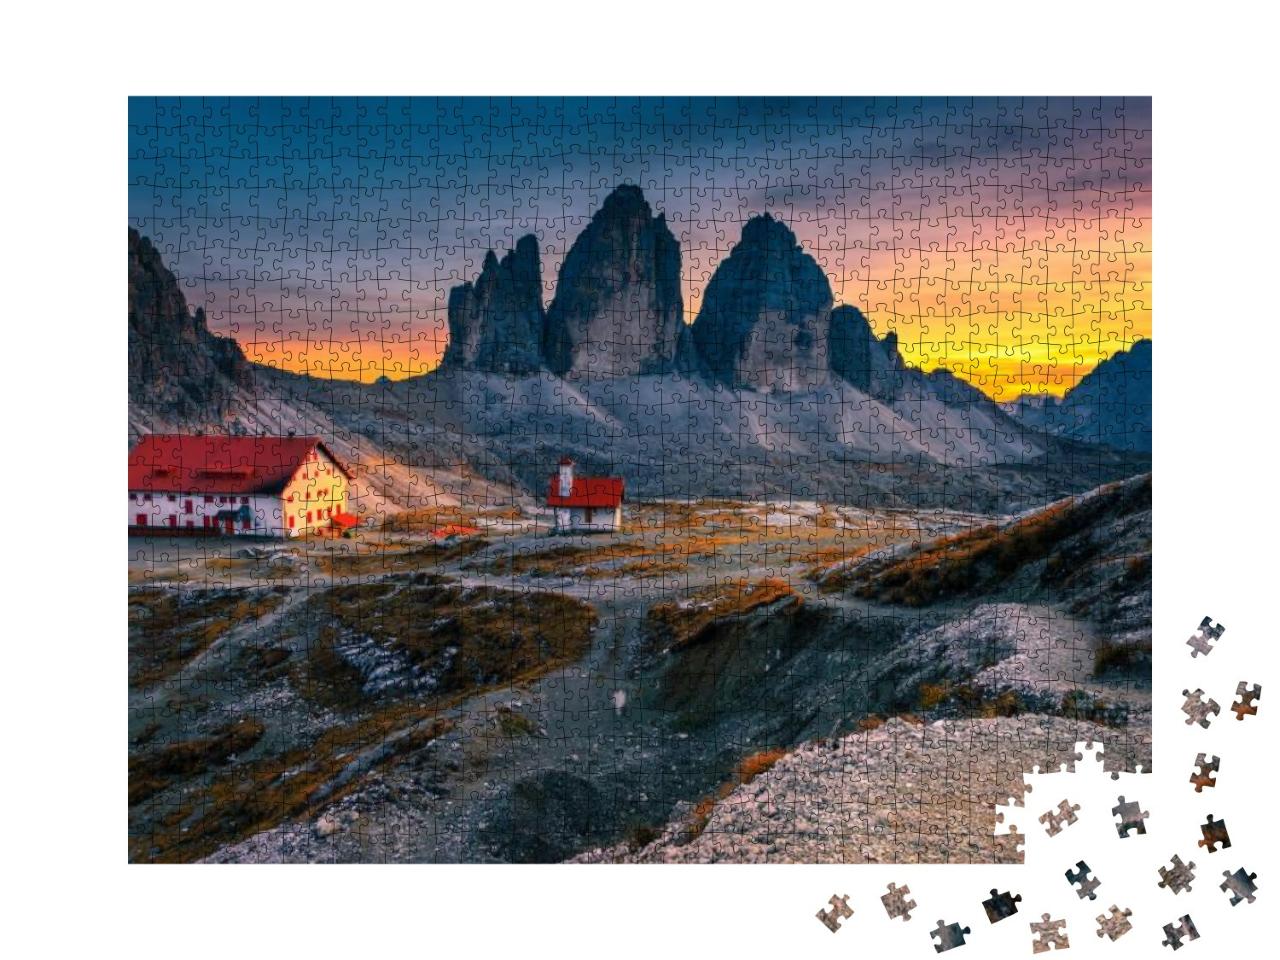 Puzzle 1000 Teile „Drei Zinnen mit Rifugio Locatelli-Hütte , Dolomiten, Italien“